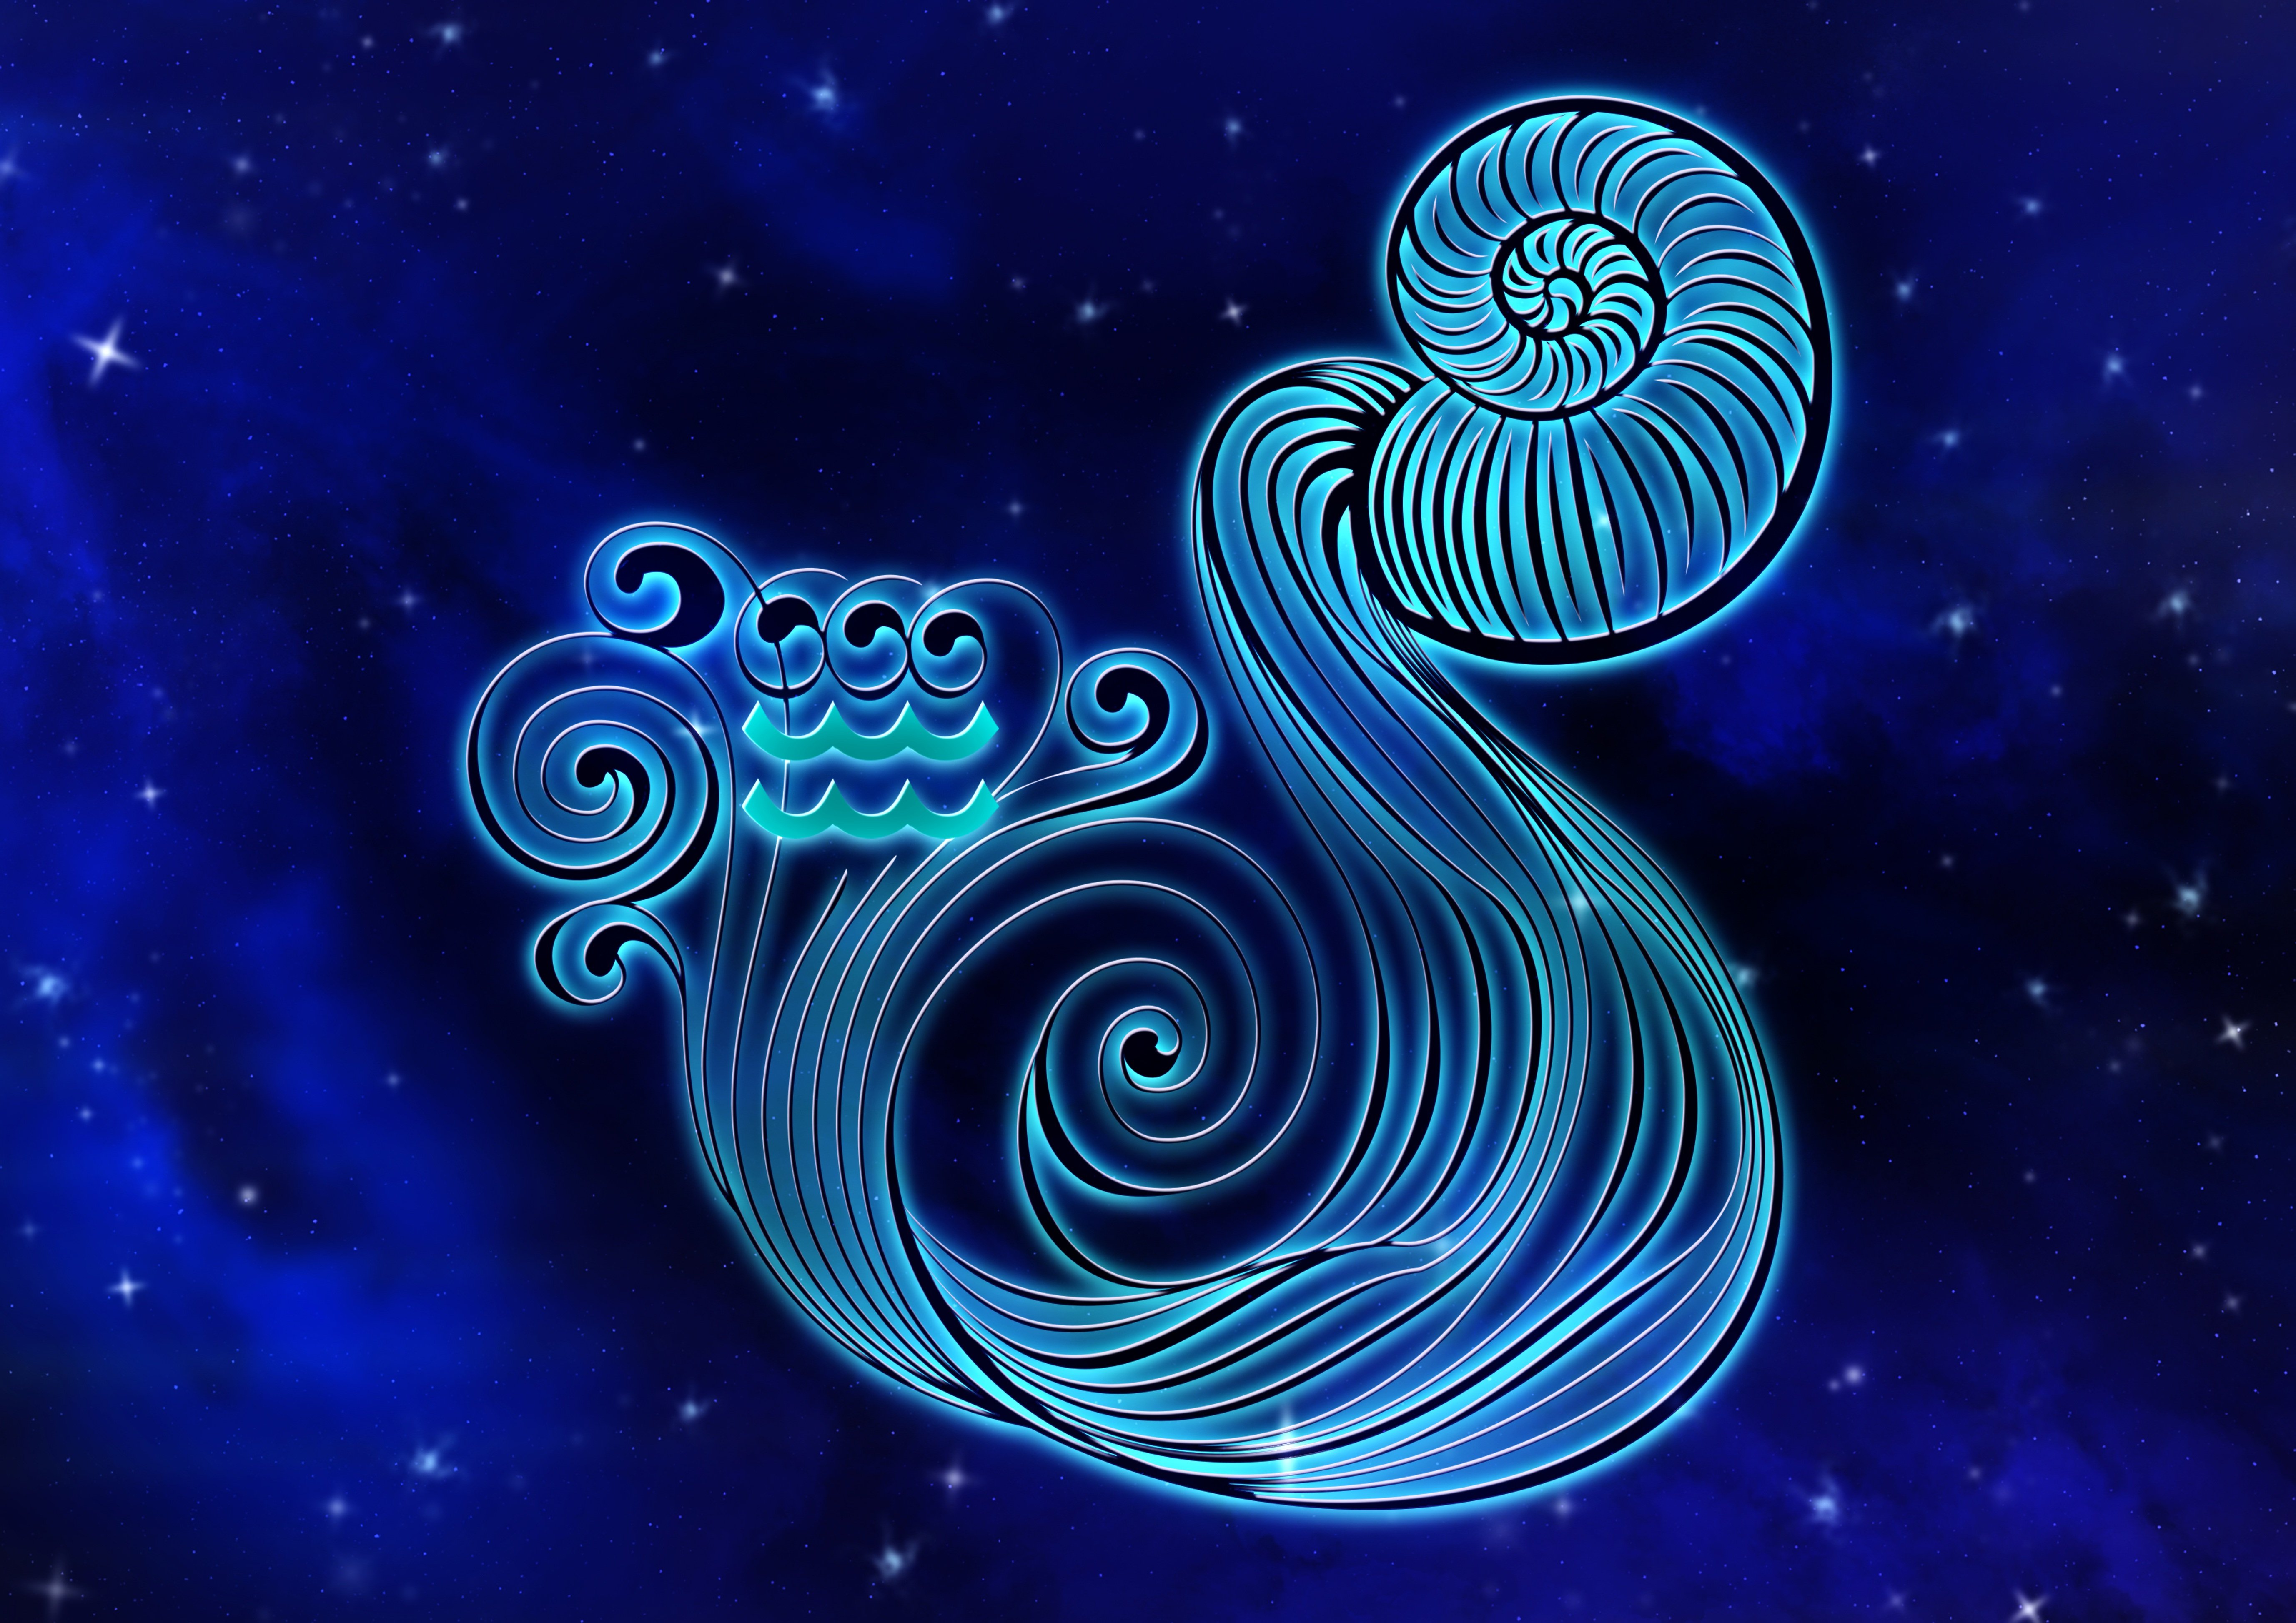 Aquarius, the Waterbearer. | Source: Pixabay